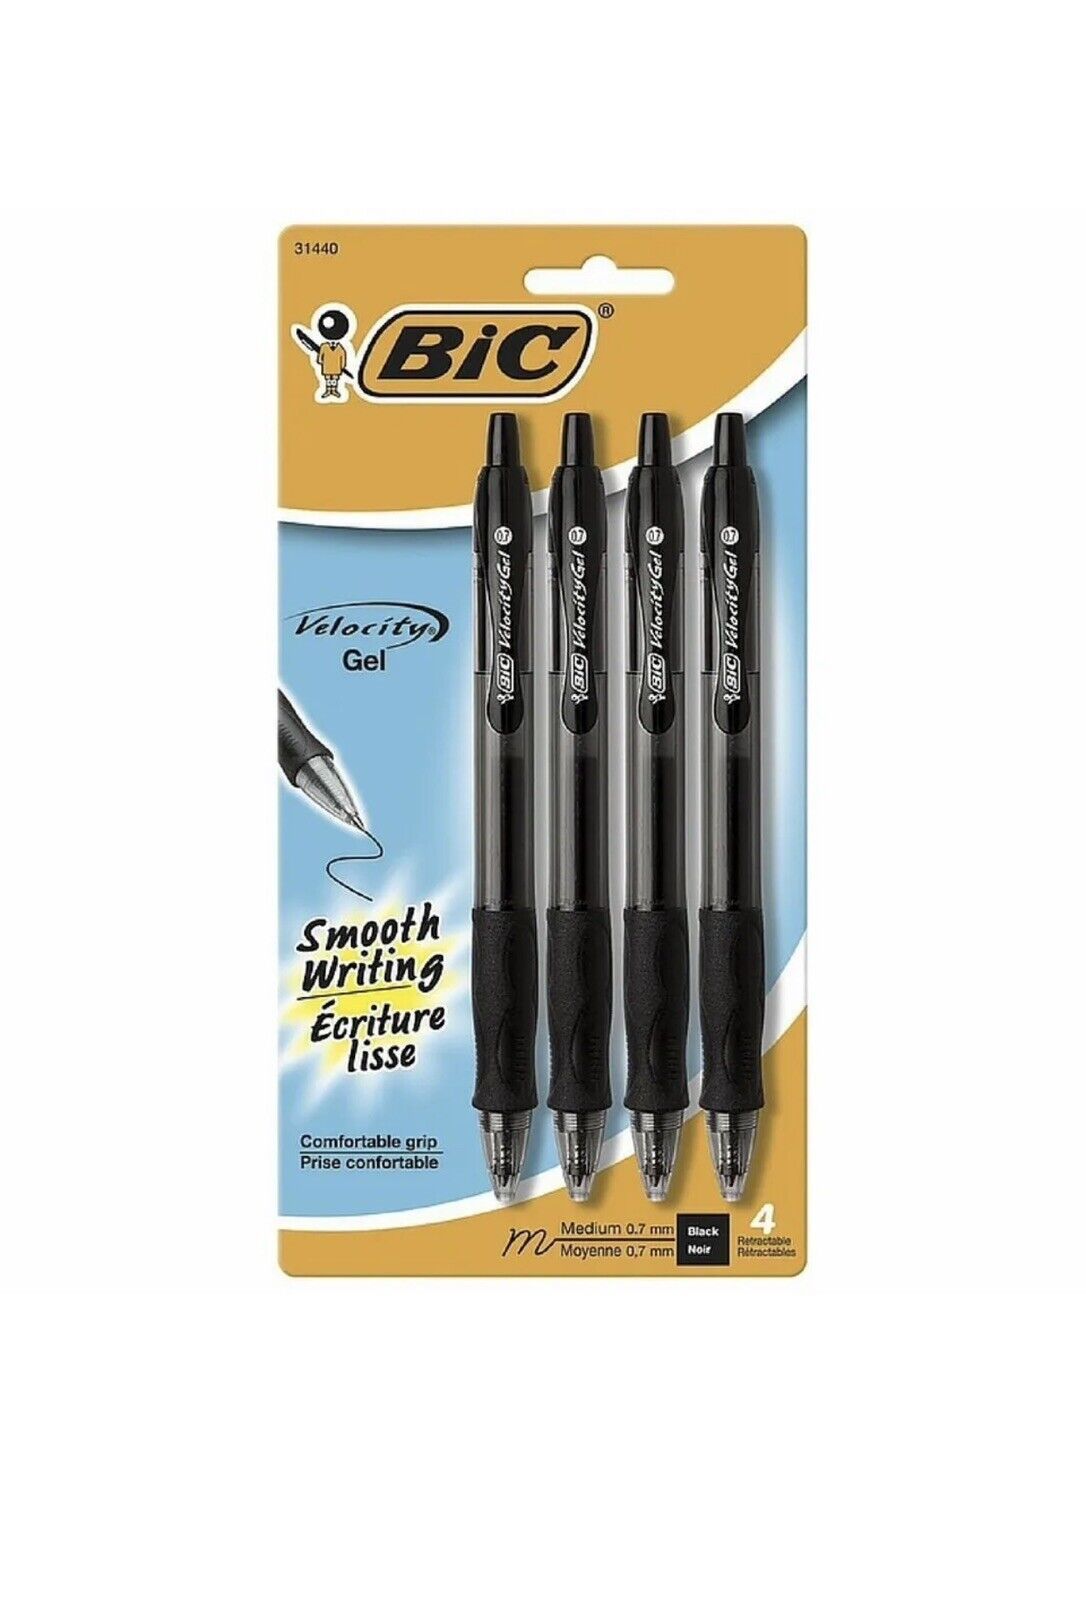 BIC Gel-ocity Retractable Gel Pen, Medium Point (0.7 mm), Black, 4-Count New - $9.99